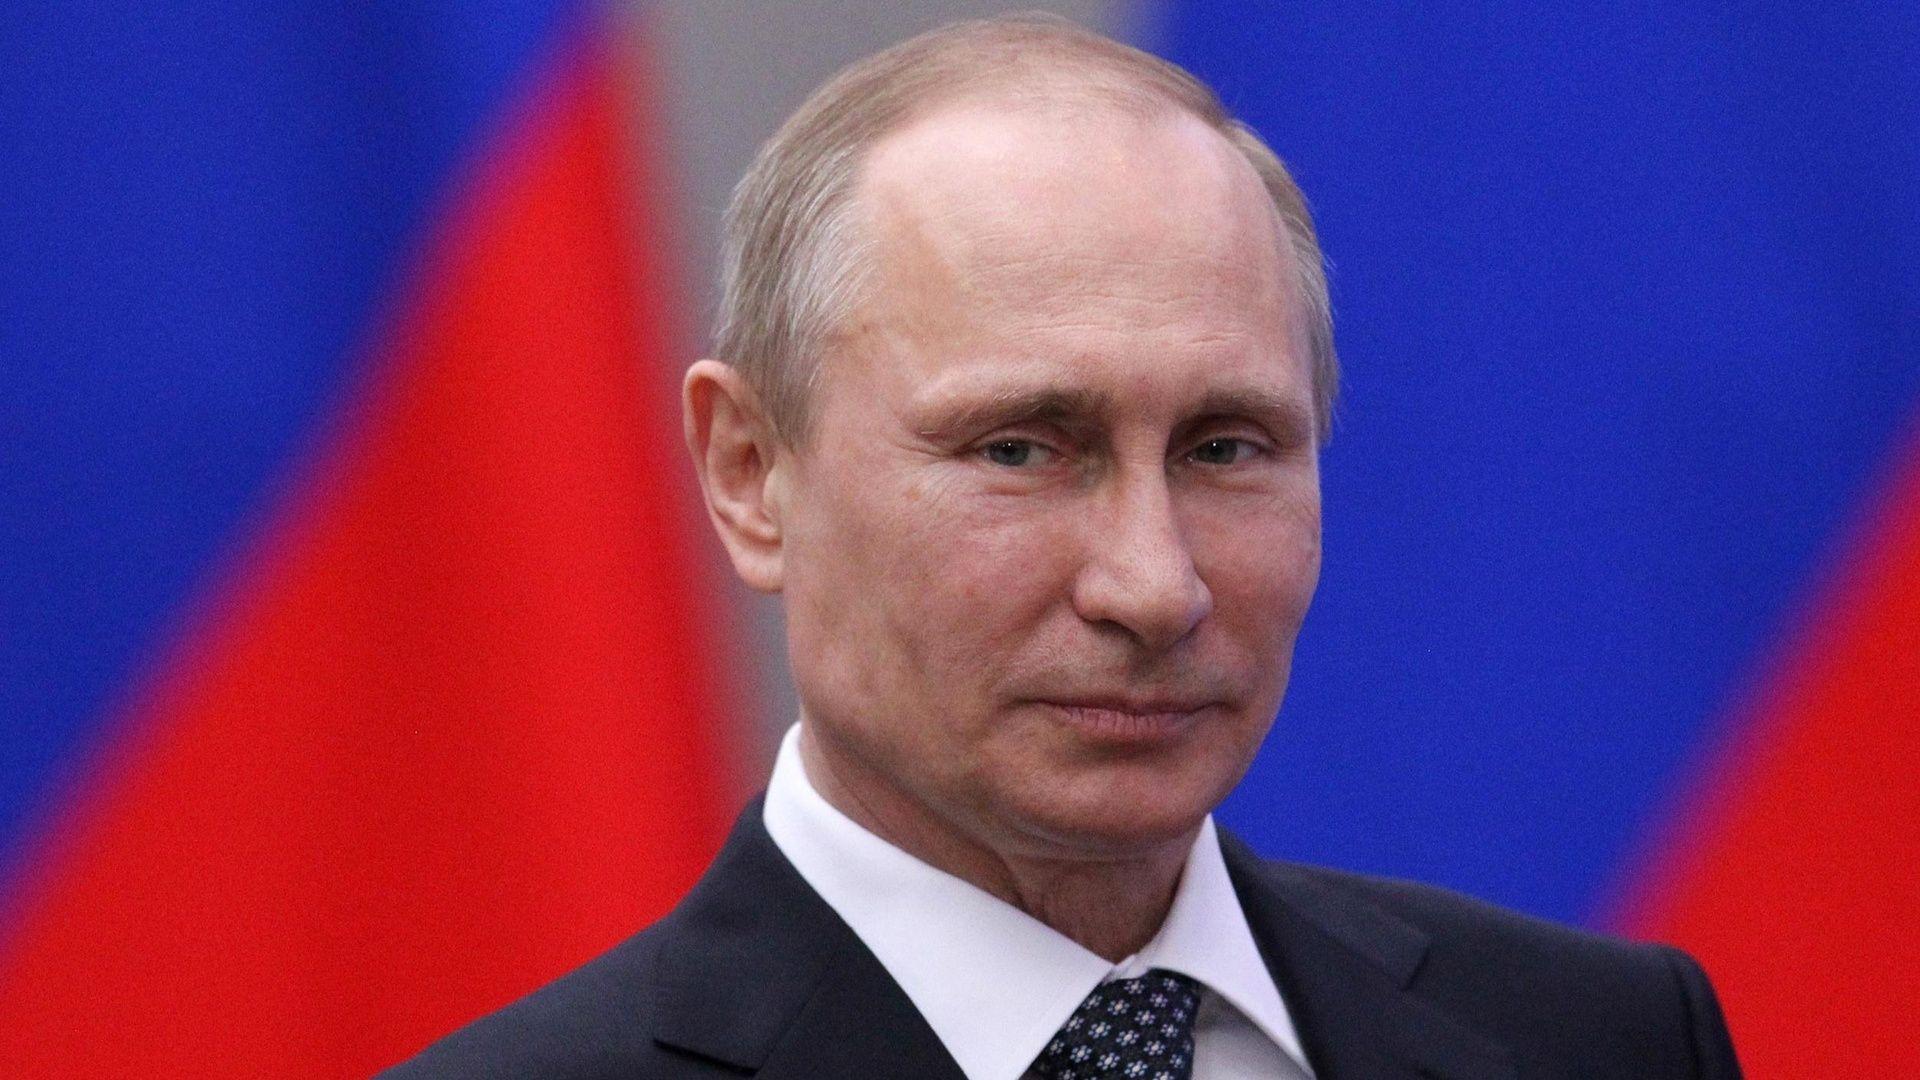 Vladimir Putin, Putin, Politician, President Of Russia